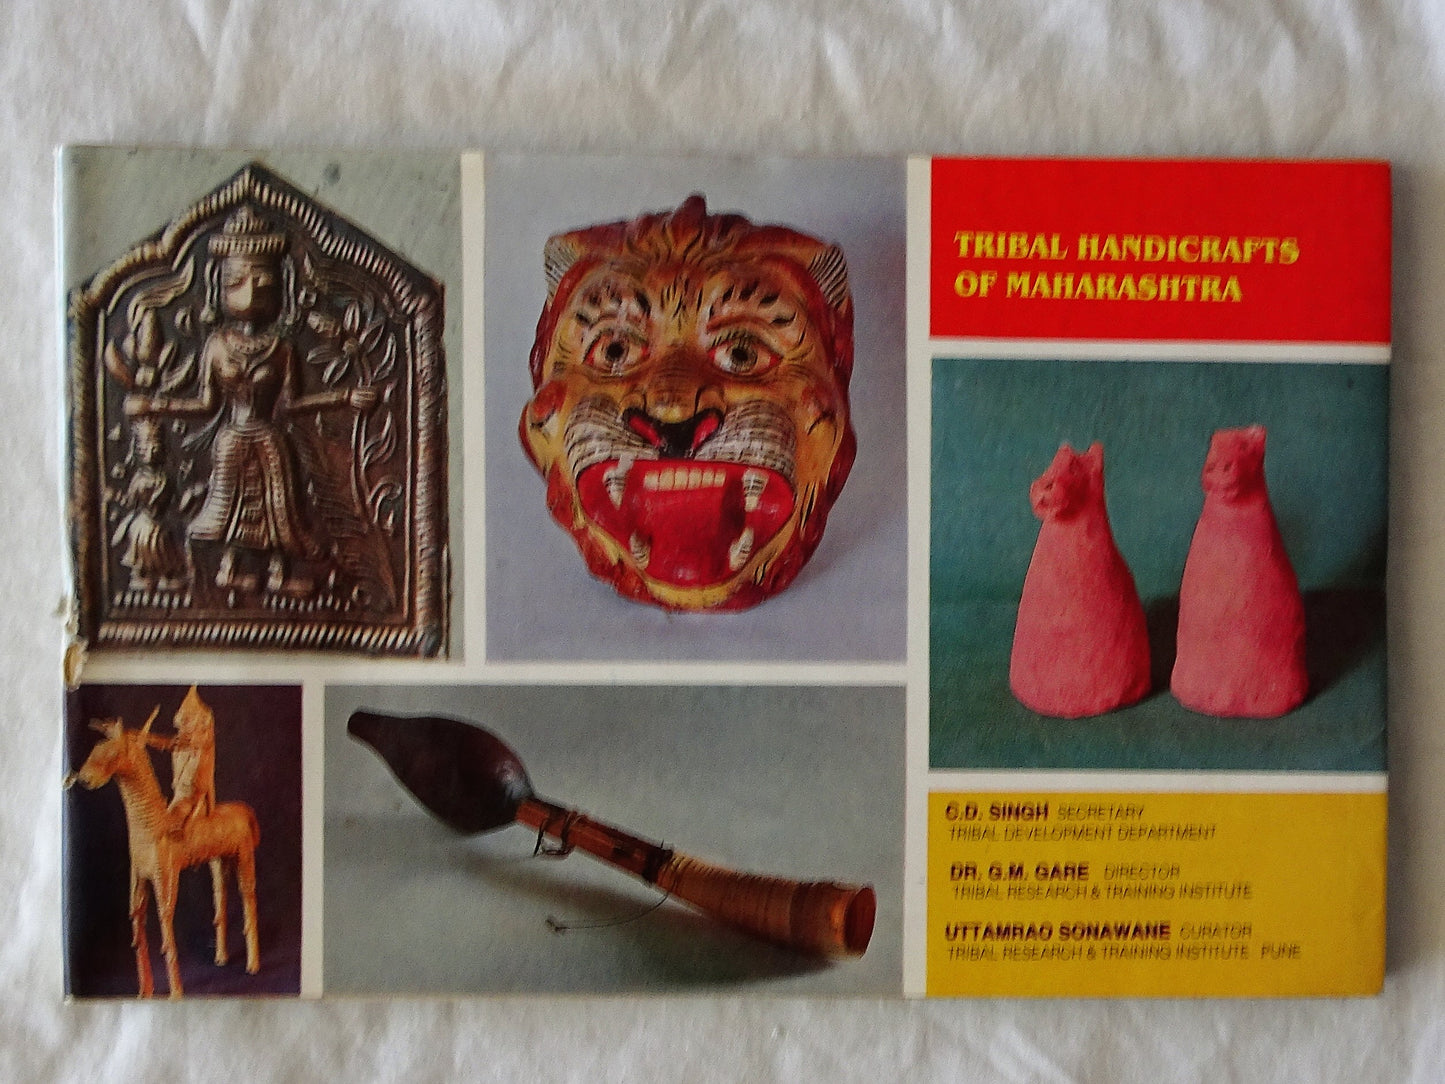 Tribal Handicrafts of Maharashtra by C. D. Singh et al.